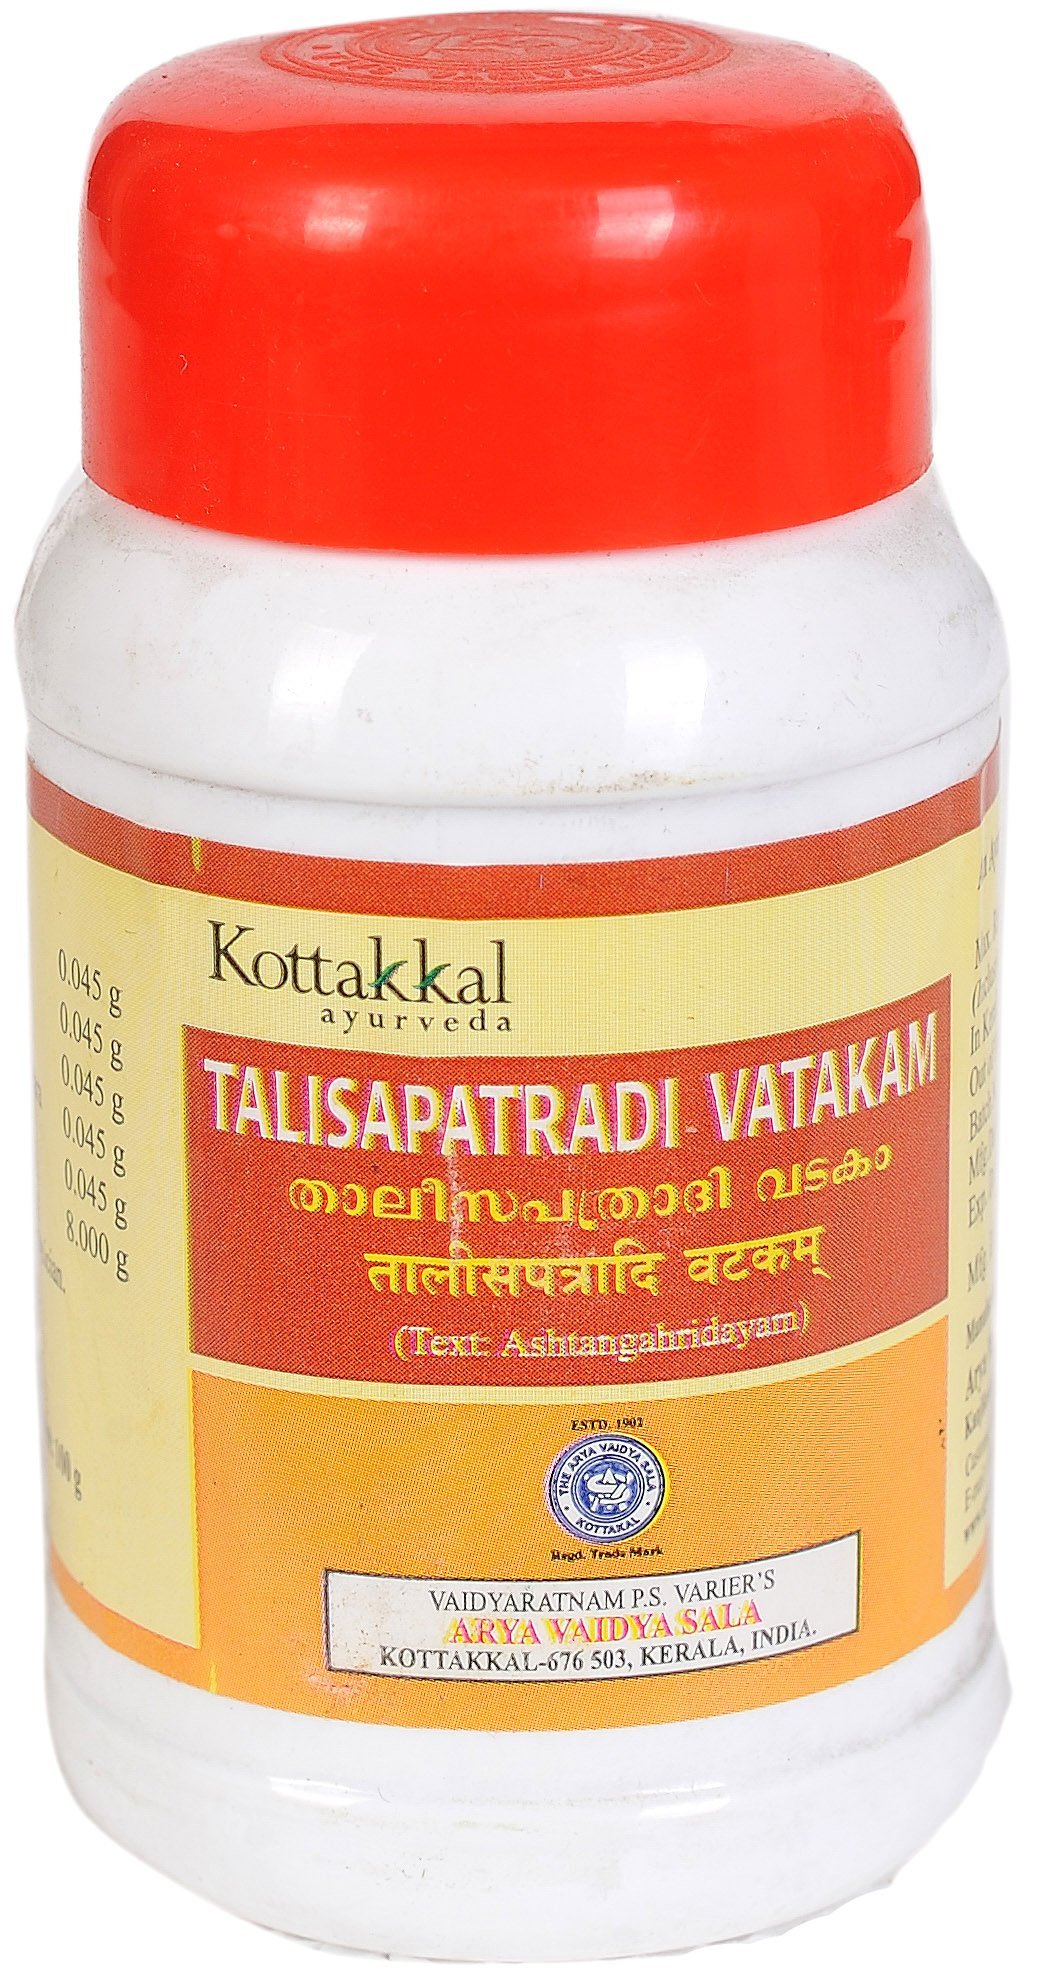 Talisapatradi Vatakam - book cover